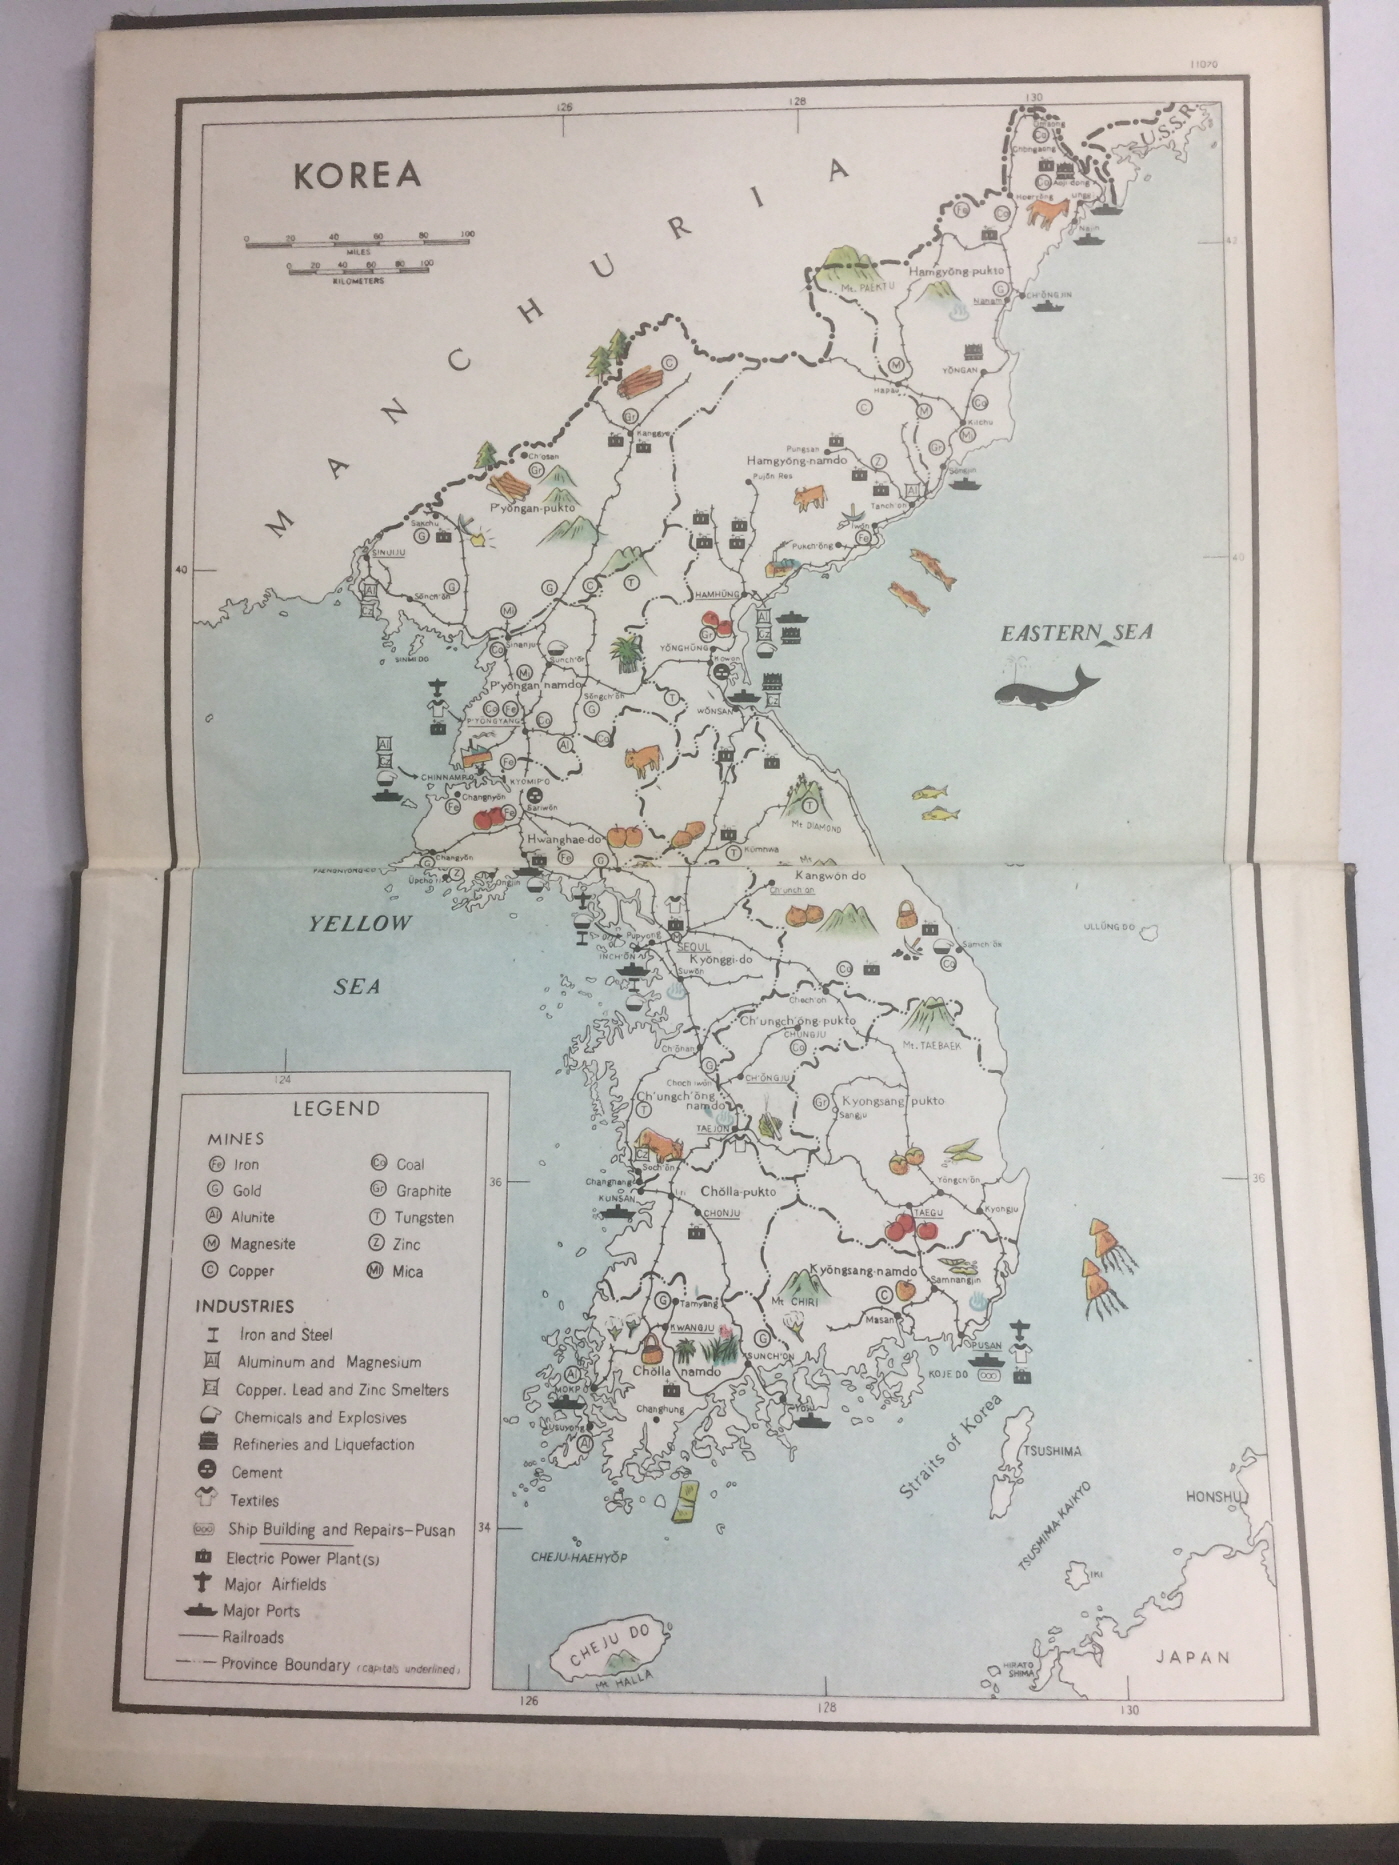 KOREA Export Dictionary 1957